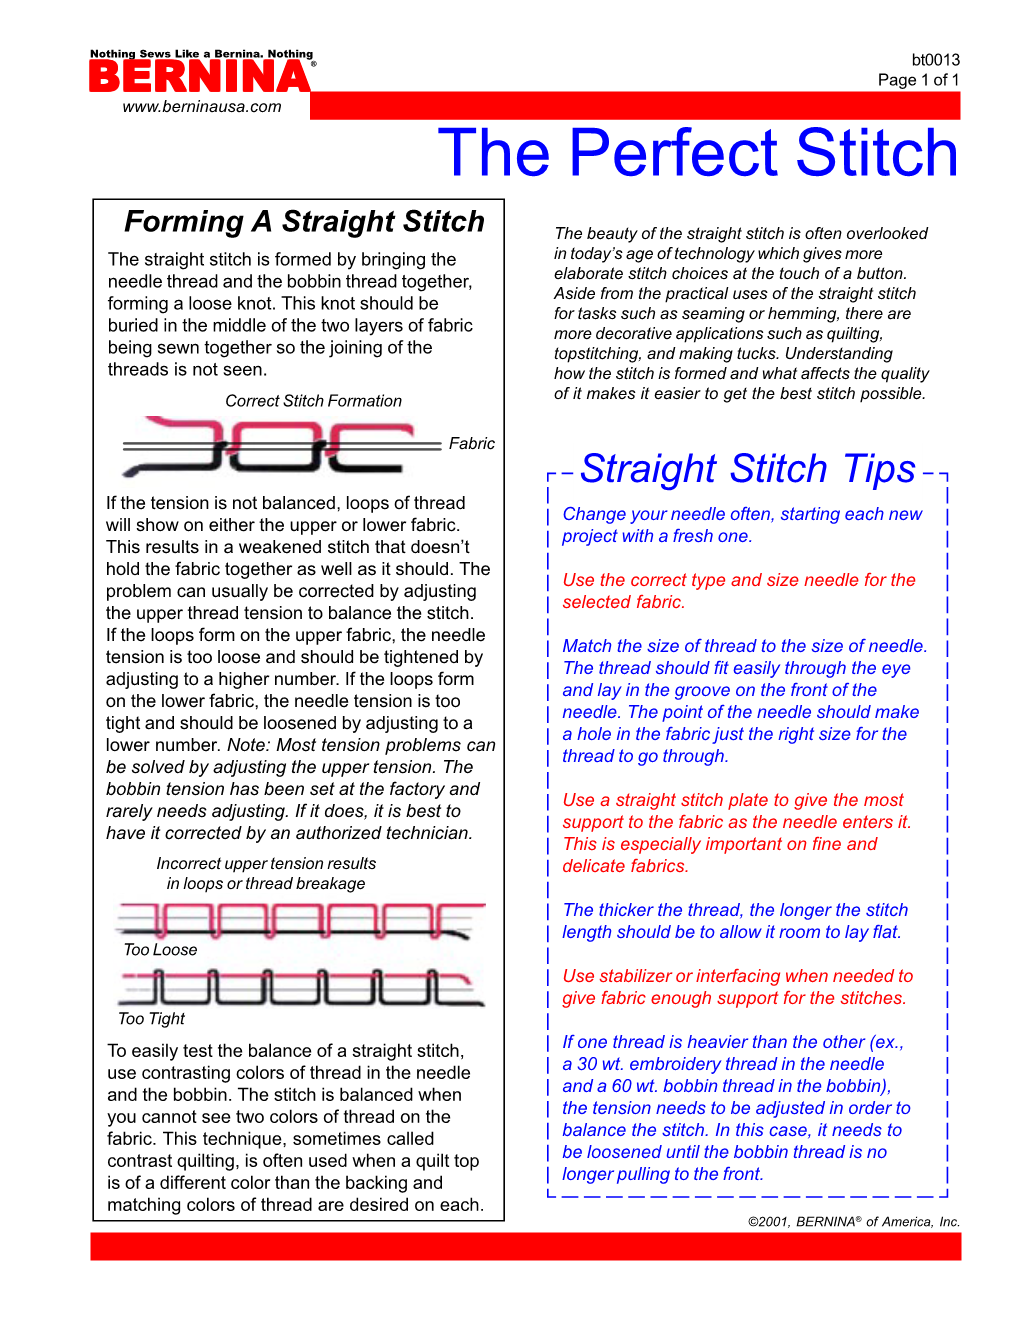 The Perfect Stitch